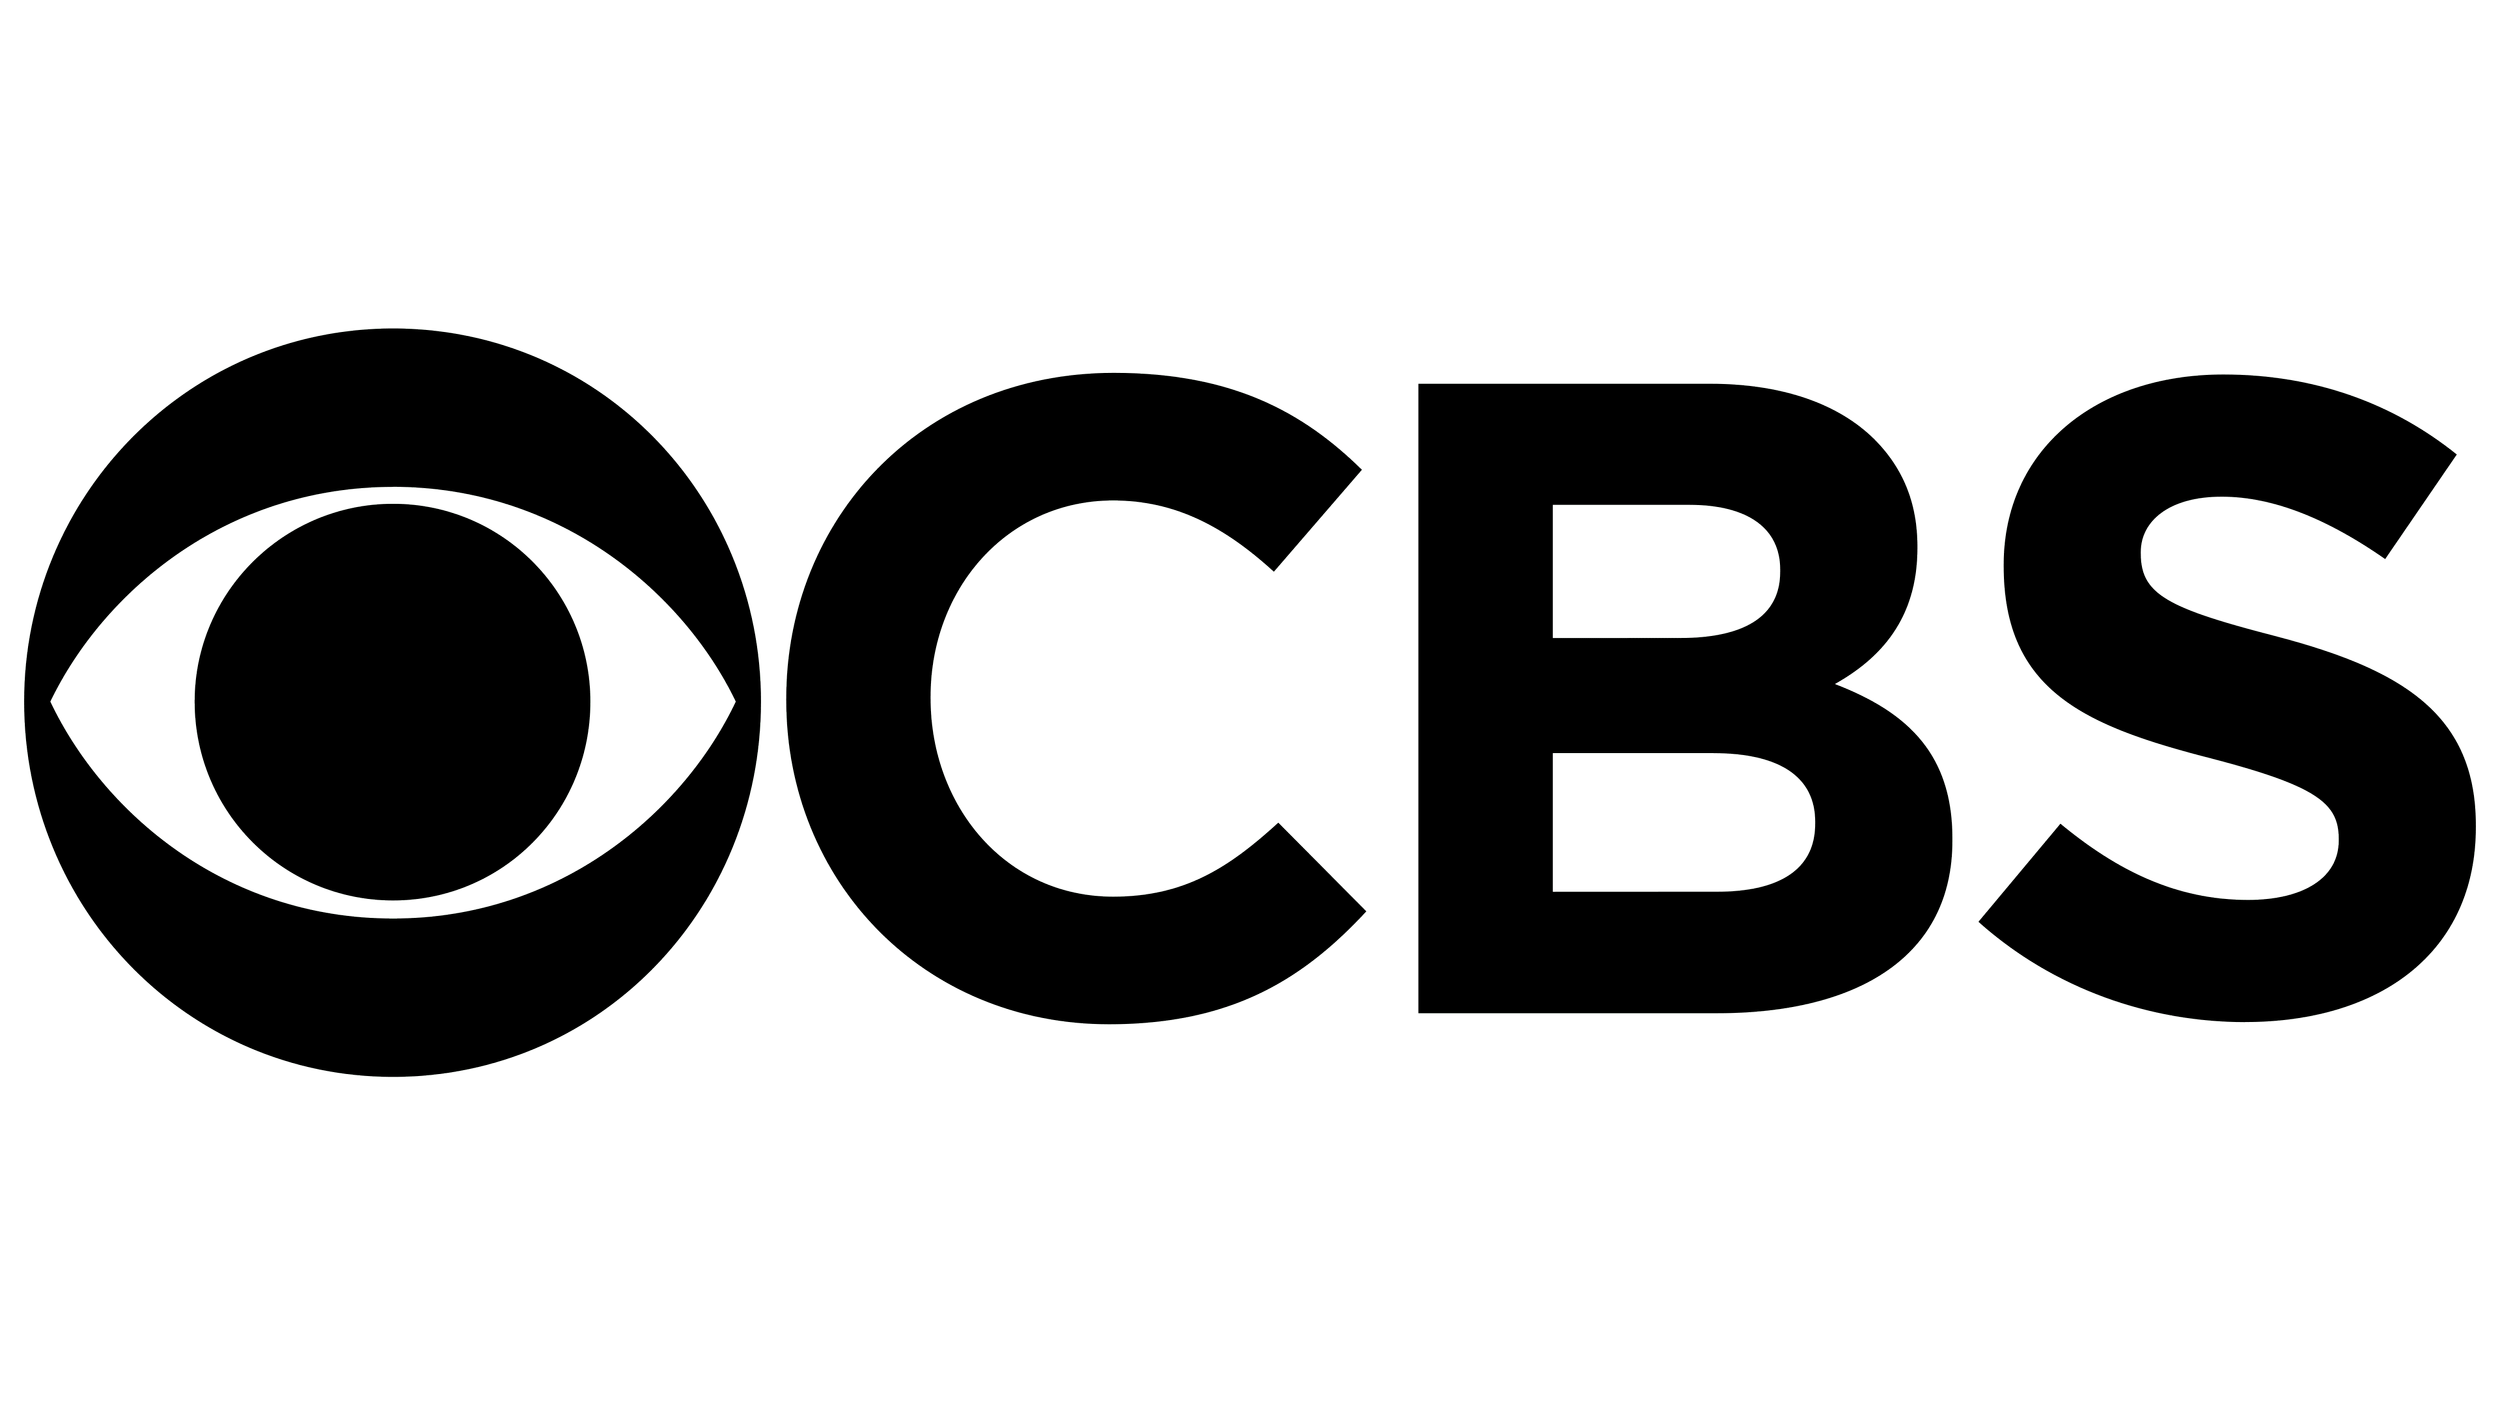 CBS_logo_PNG2.png